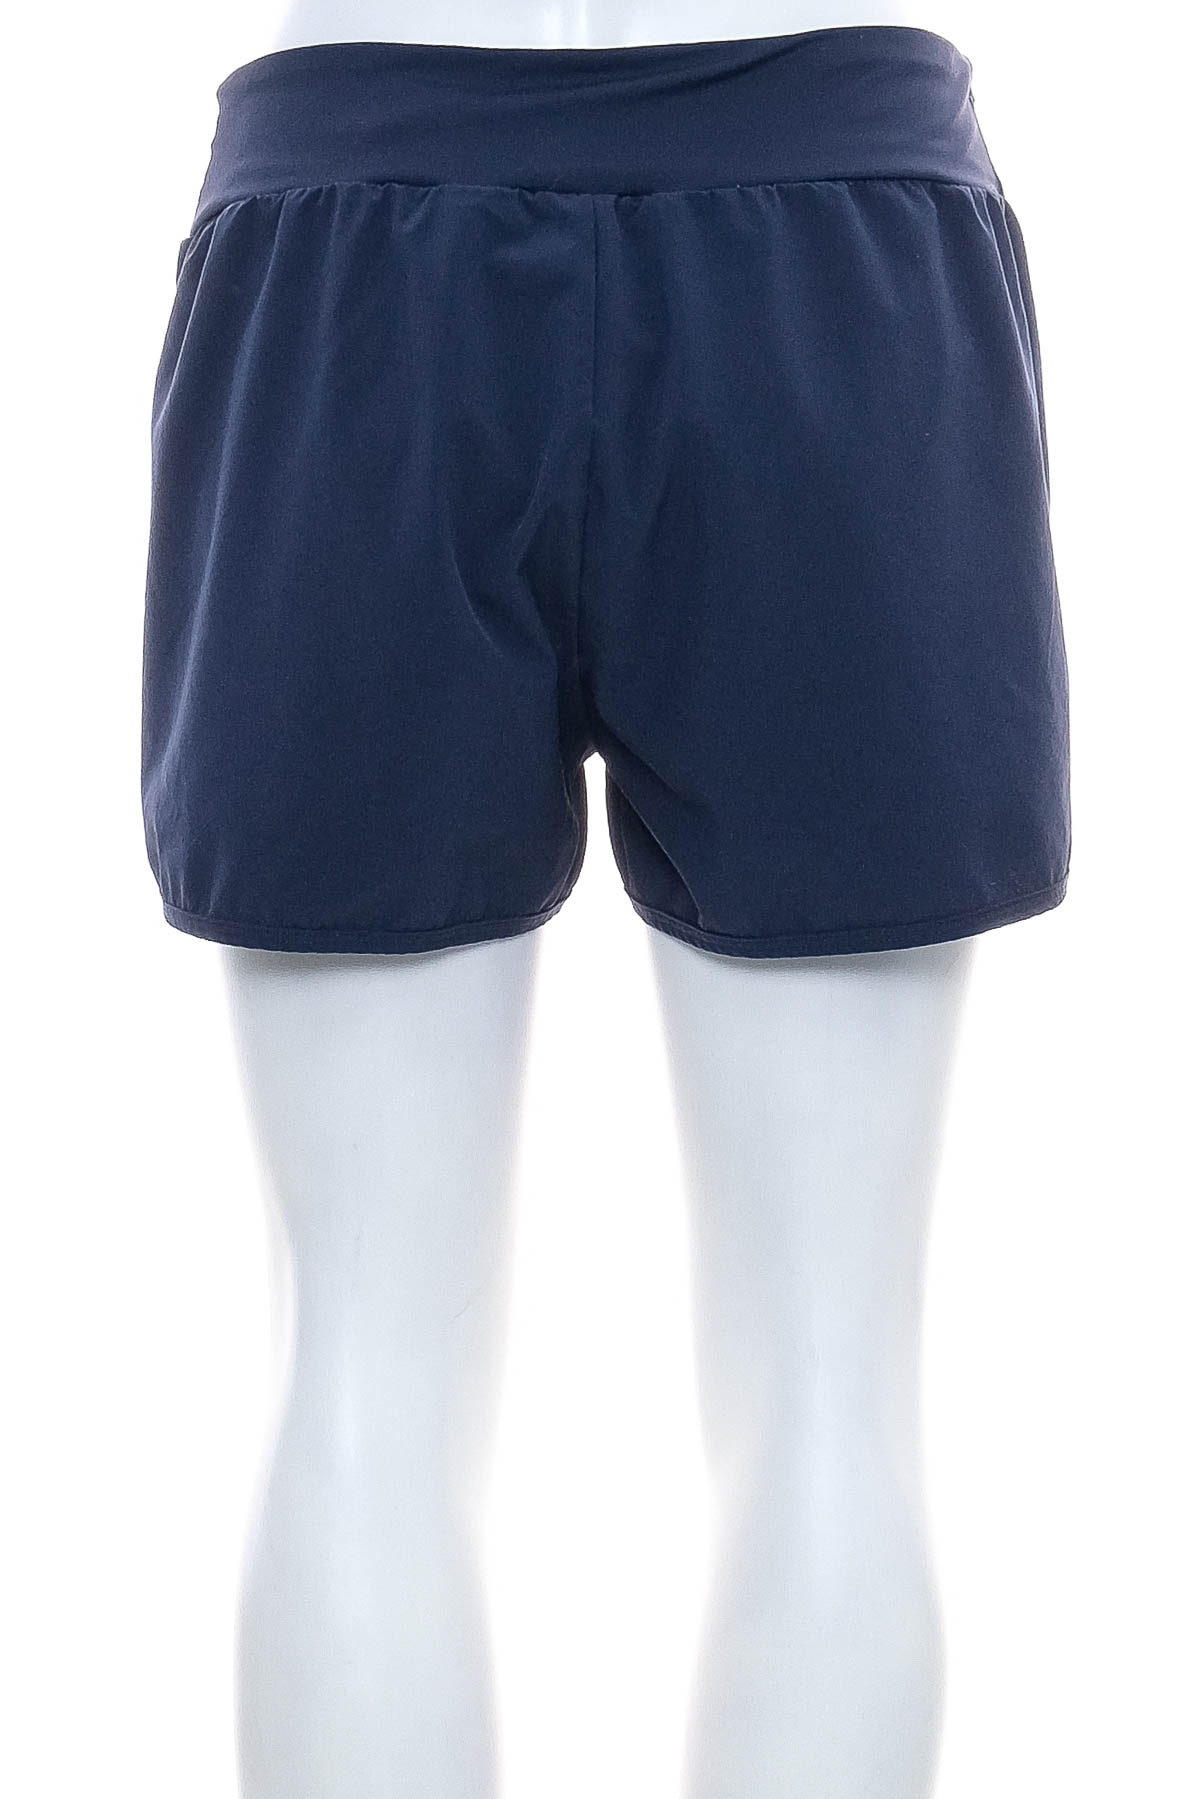 Women's shorts - BJORN BORG - 1